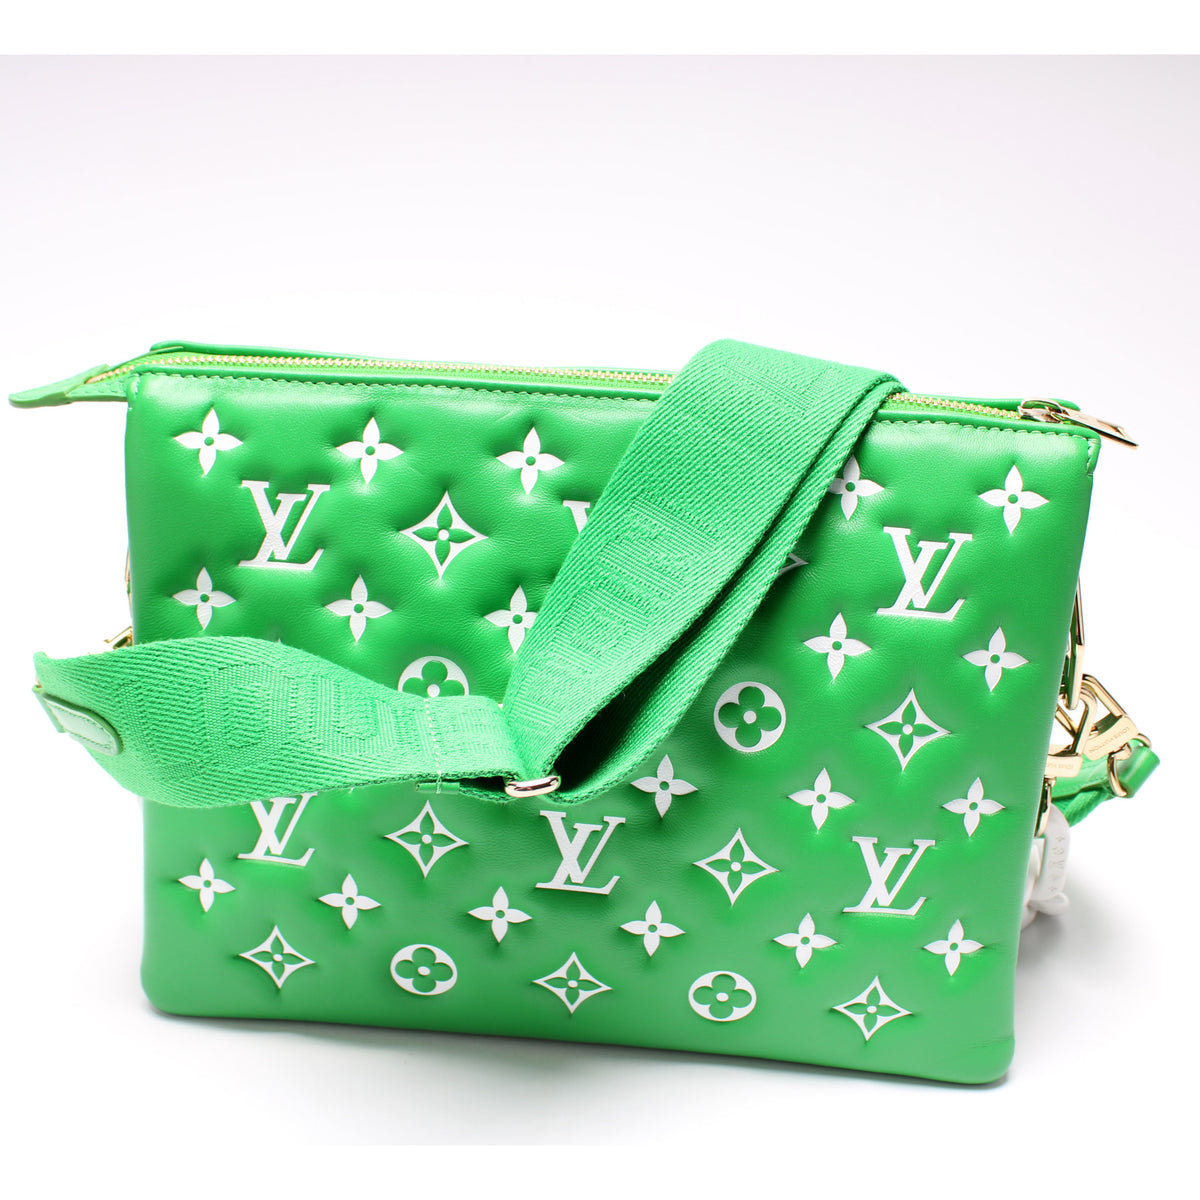 louis vuitton green bag price